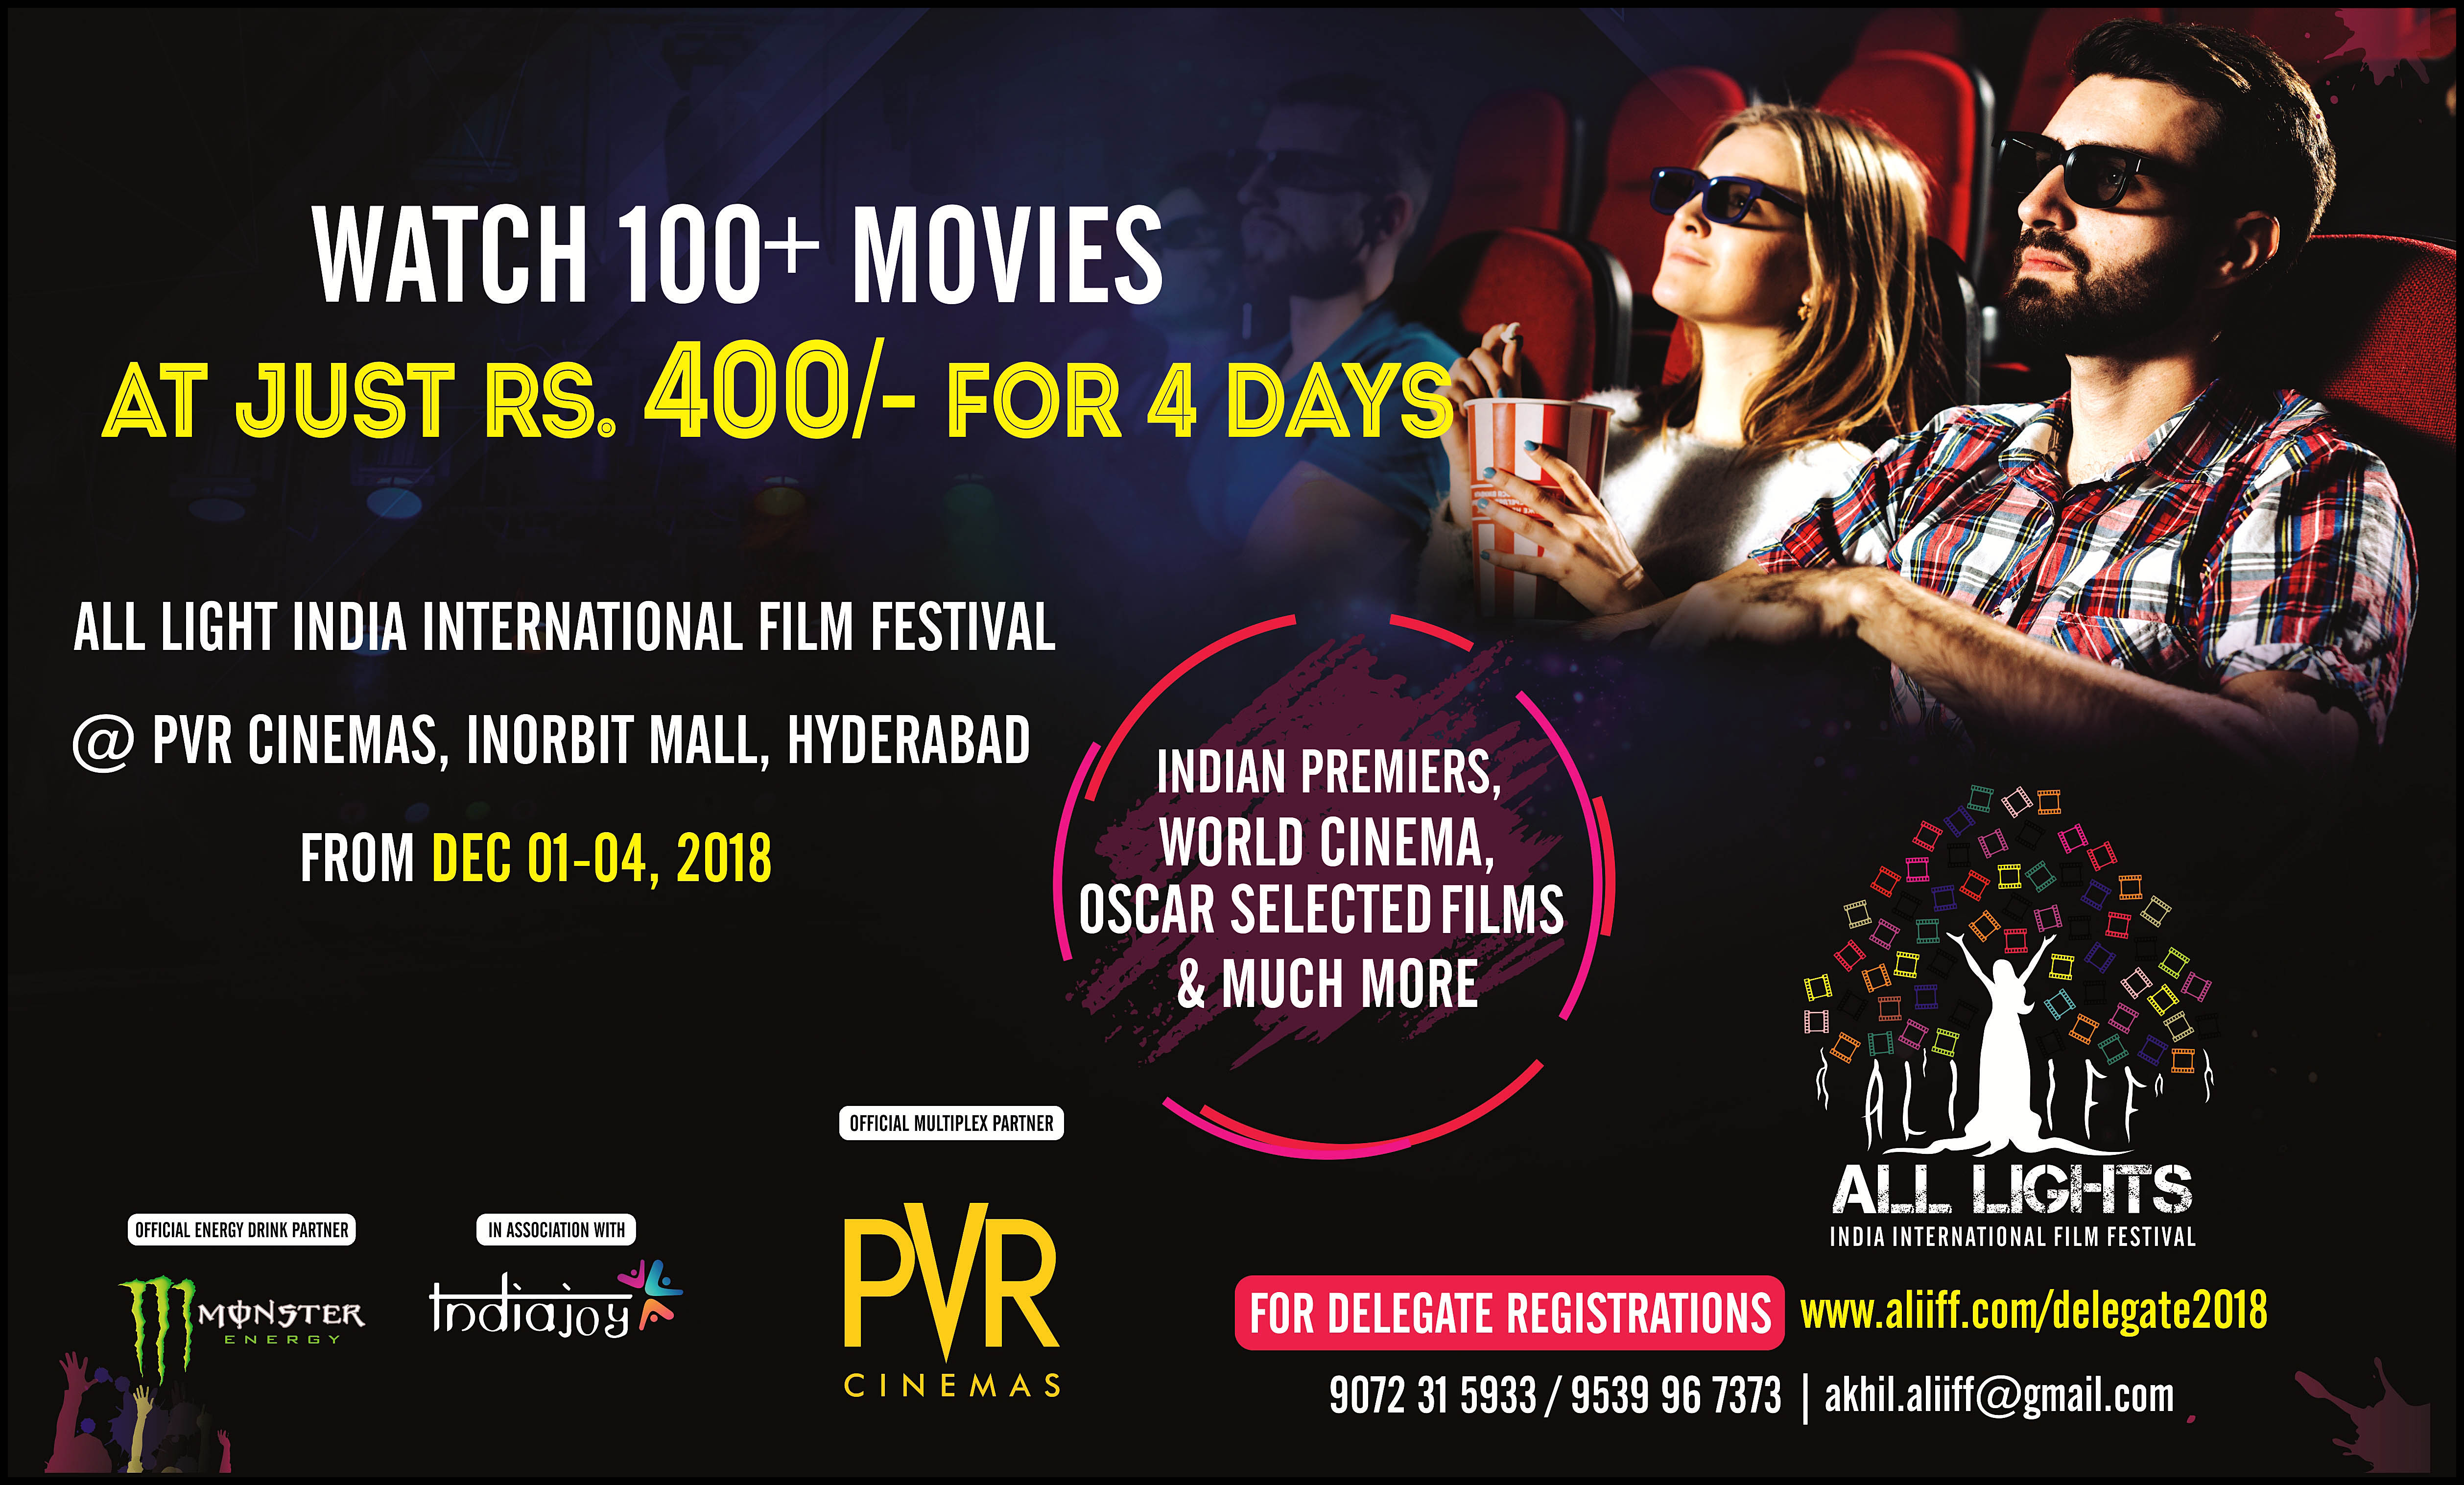 ALL LIGHTS INDIA INTERNATIONAL FILM FESTIVAL, Hyderabad, Telangana, India